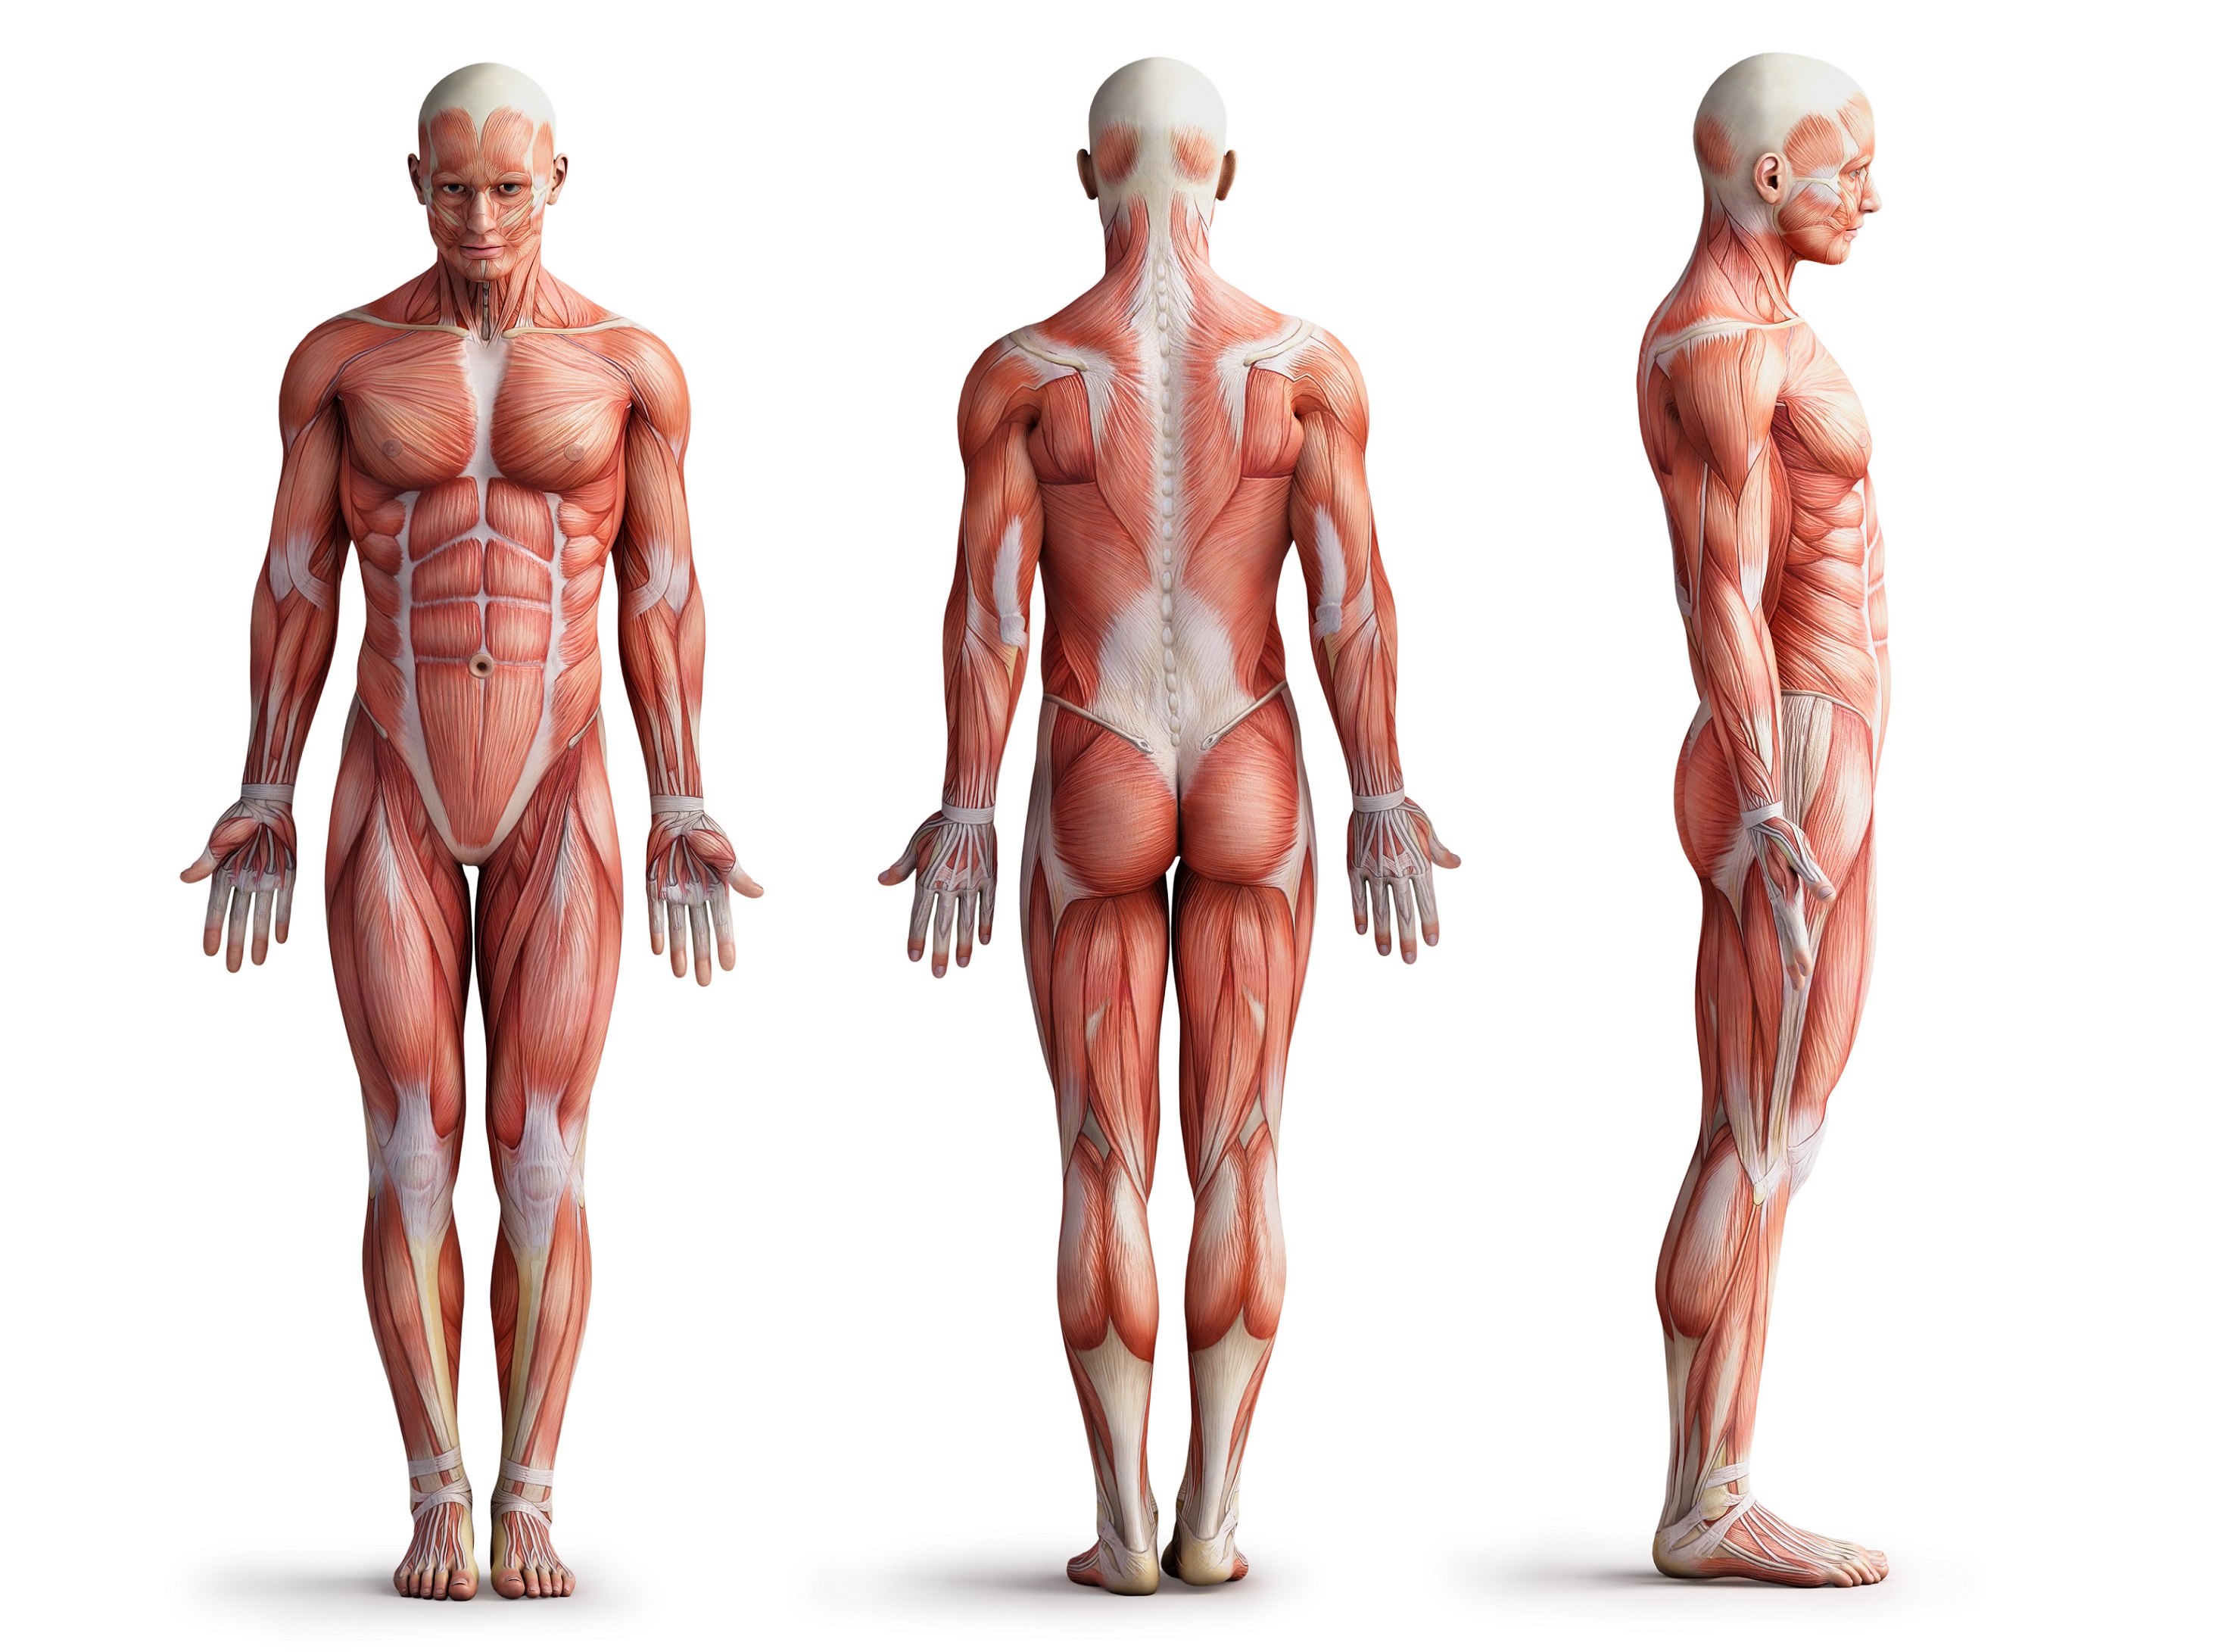 Мышцы картинка. Мышцы человека. Анатомия тела. Человеческое тело. Мускулатура человека анатомия.